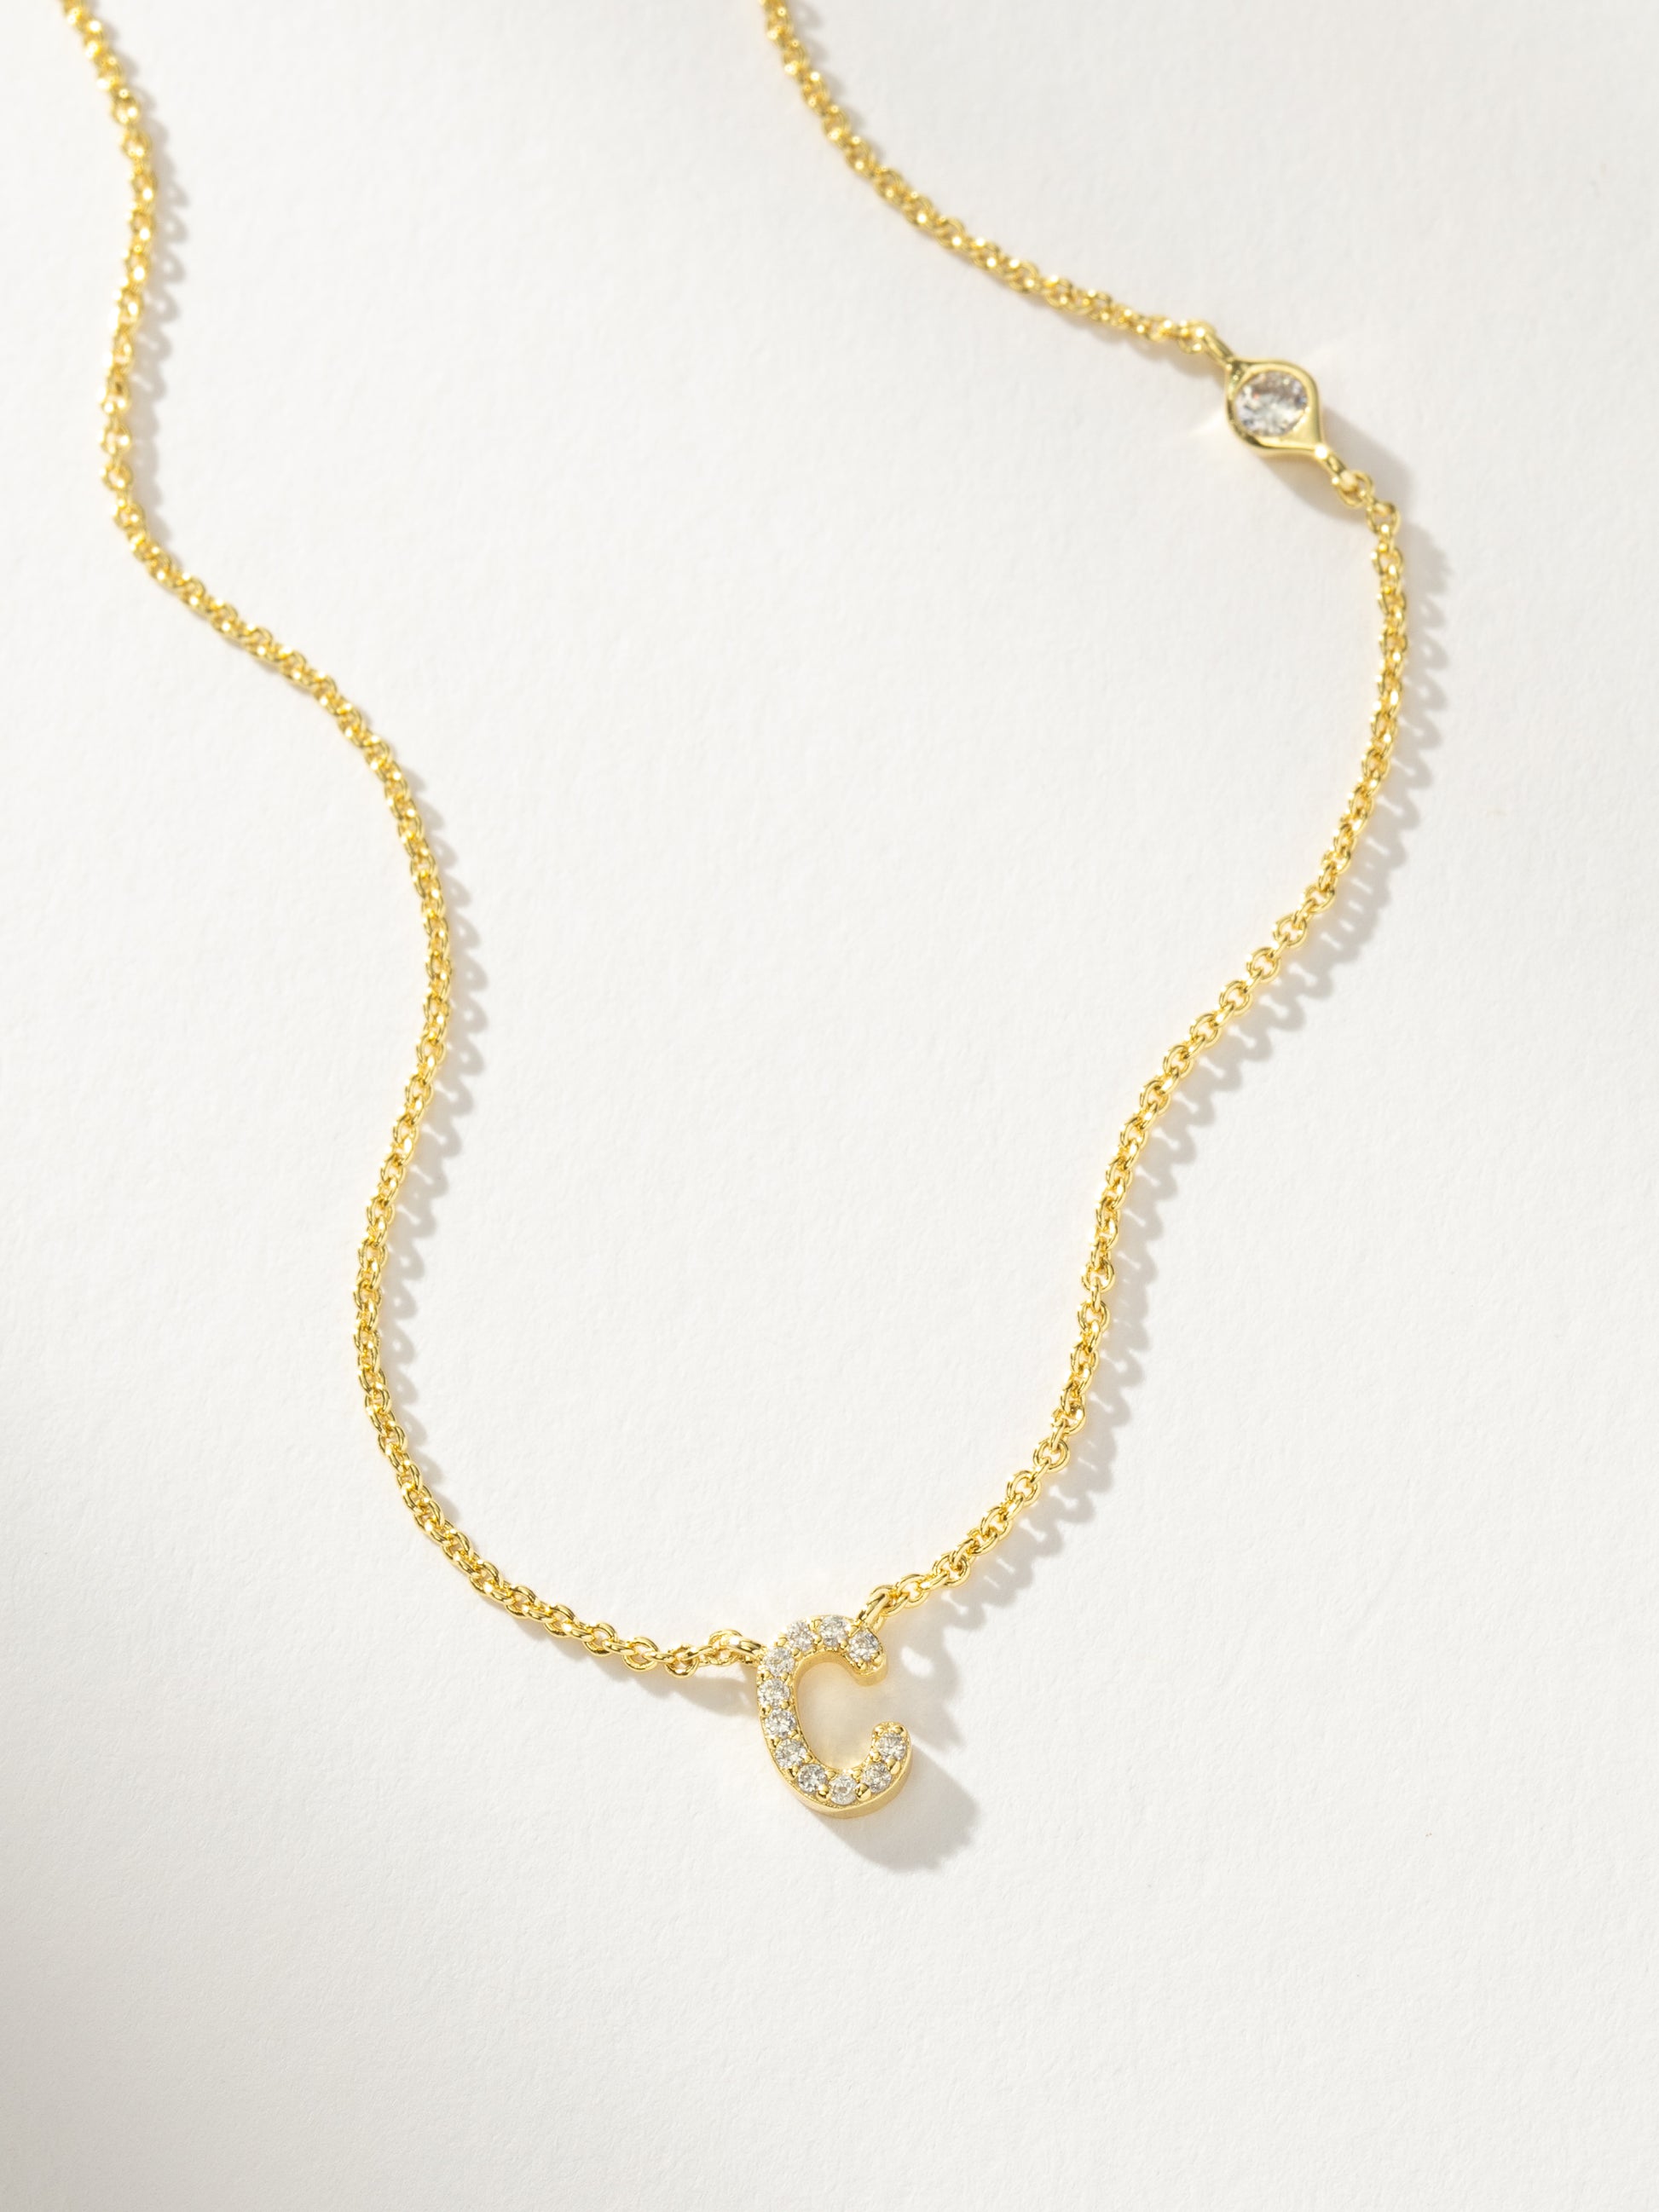 Pavé Initial Necklace | Gold C | Product Detail Image | Uncommon James